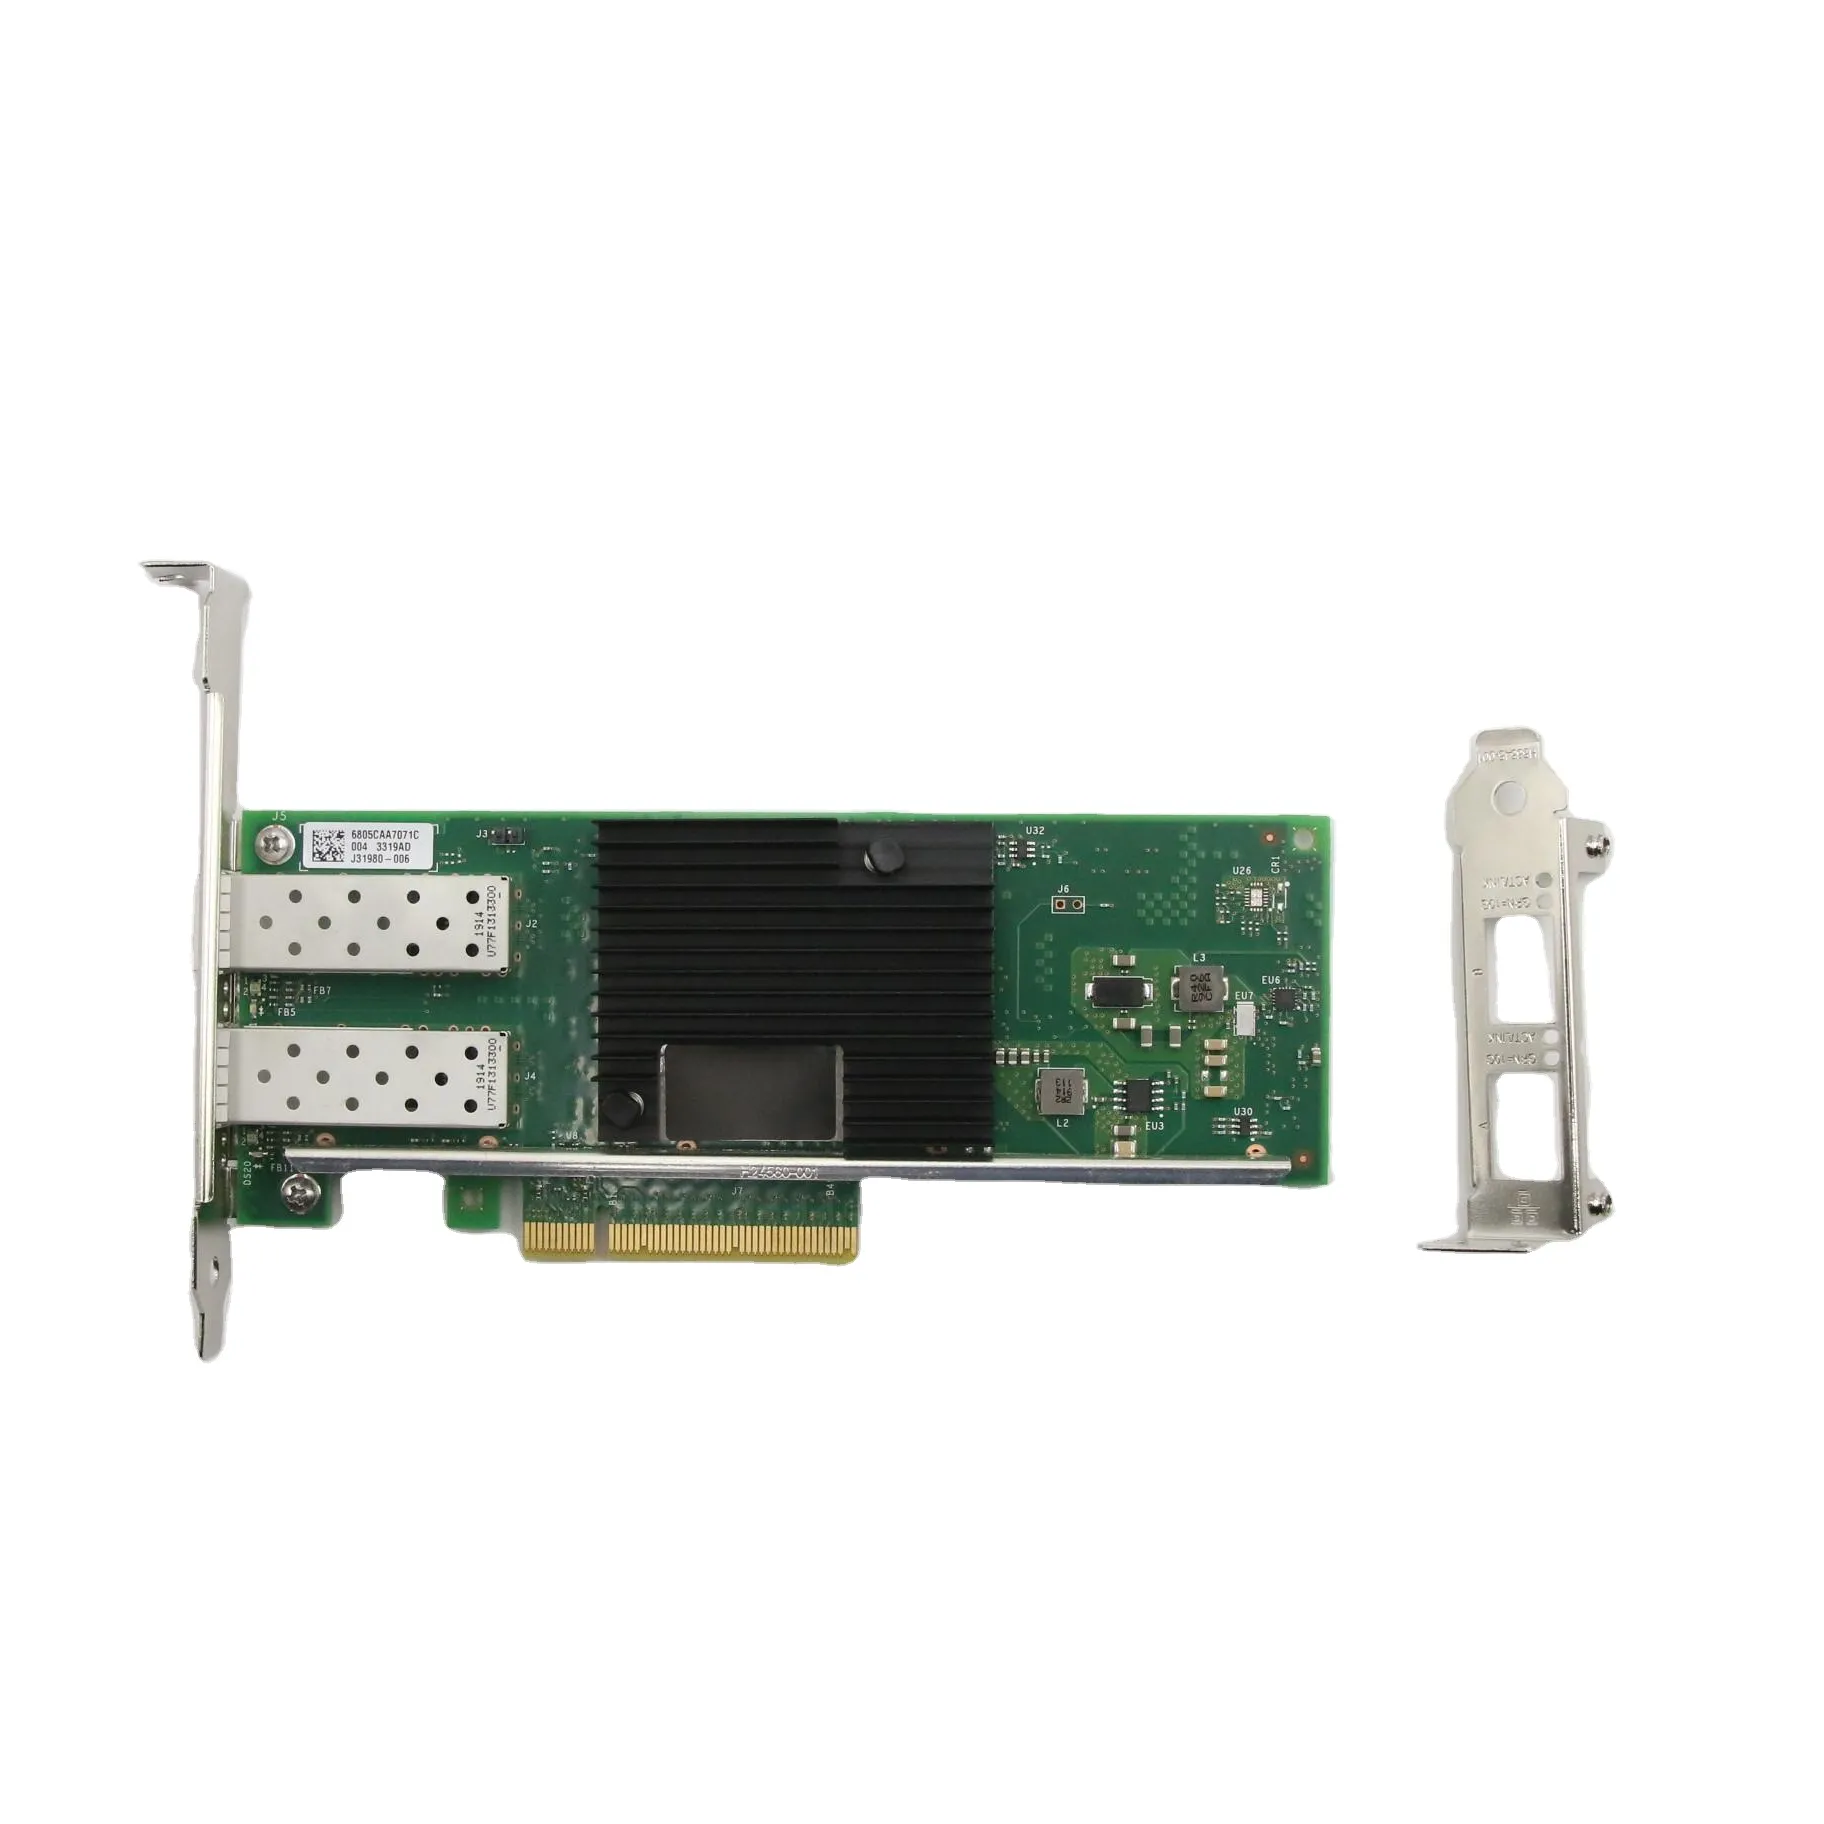 00YK615 ThinkSystem X710-DA2 PCIe 10Gb 2-port SFP+ Ethernet Adapter by Intel